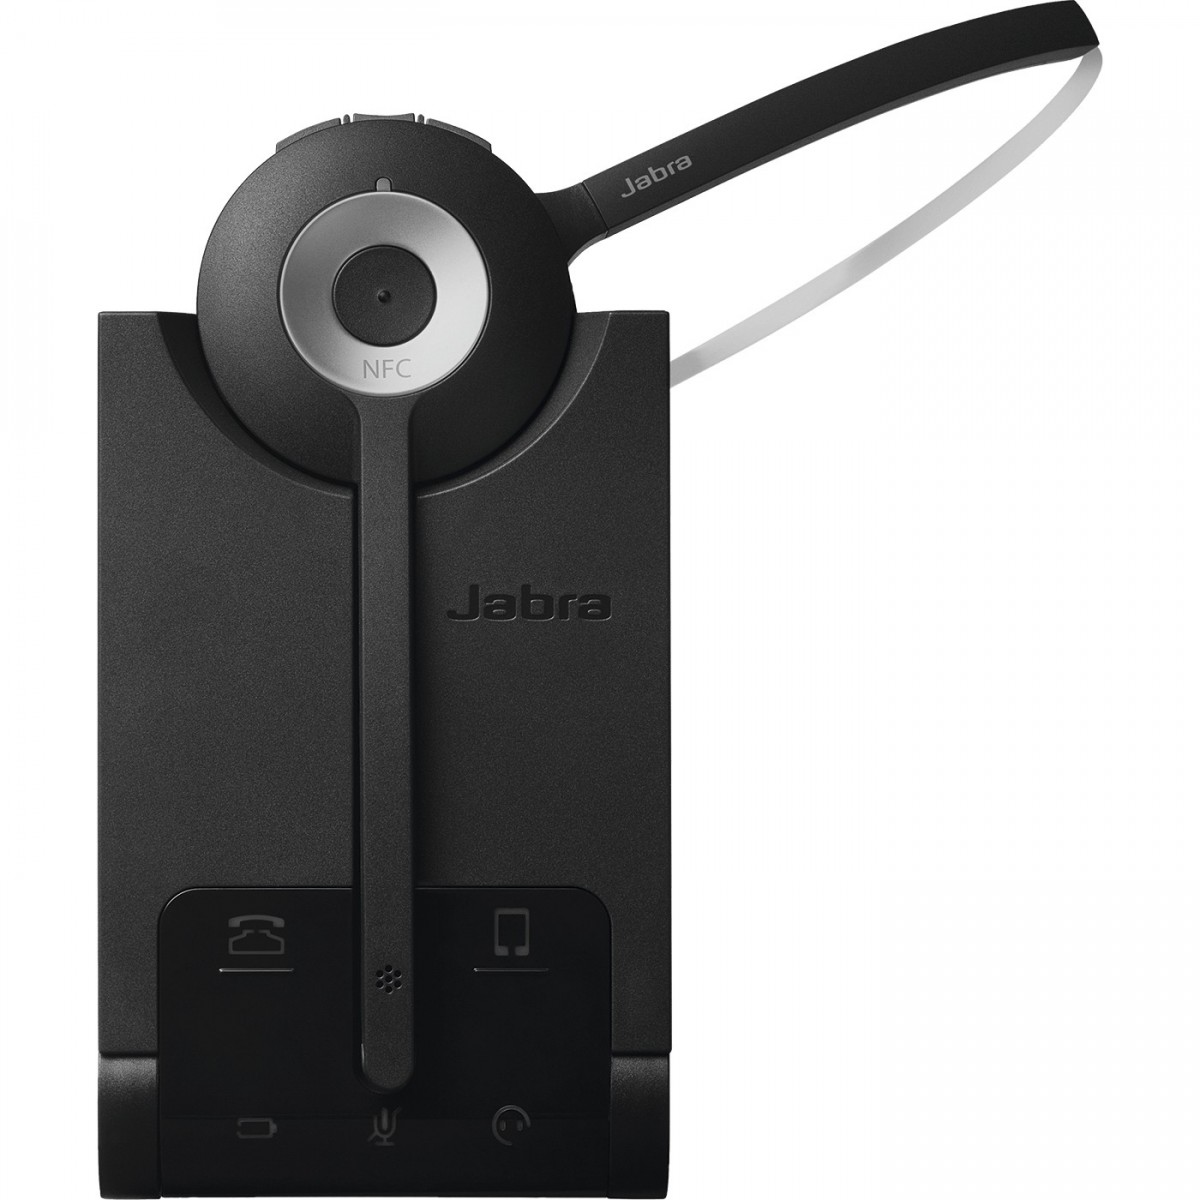 Jabra Pro 925 - Headset - Ear-hook - Office/Call center - Black - Binaural - China